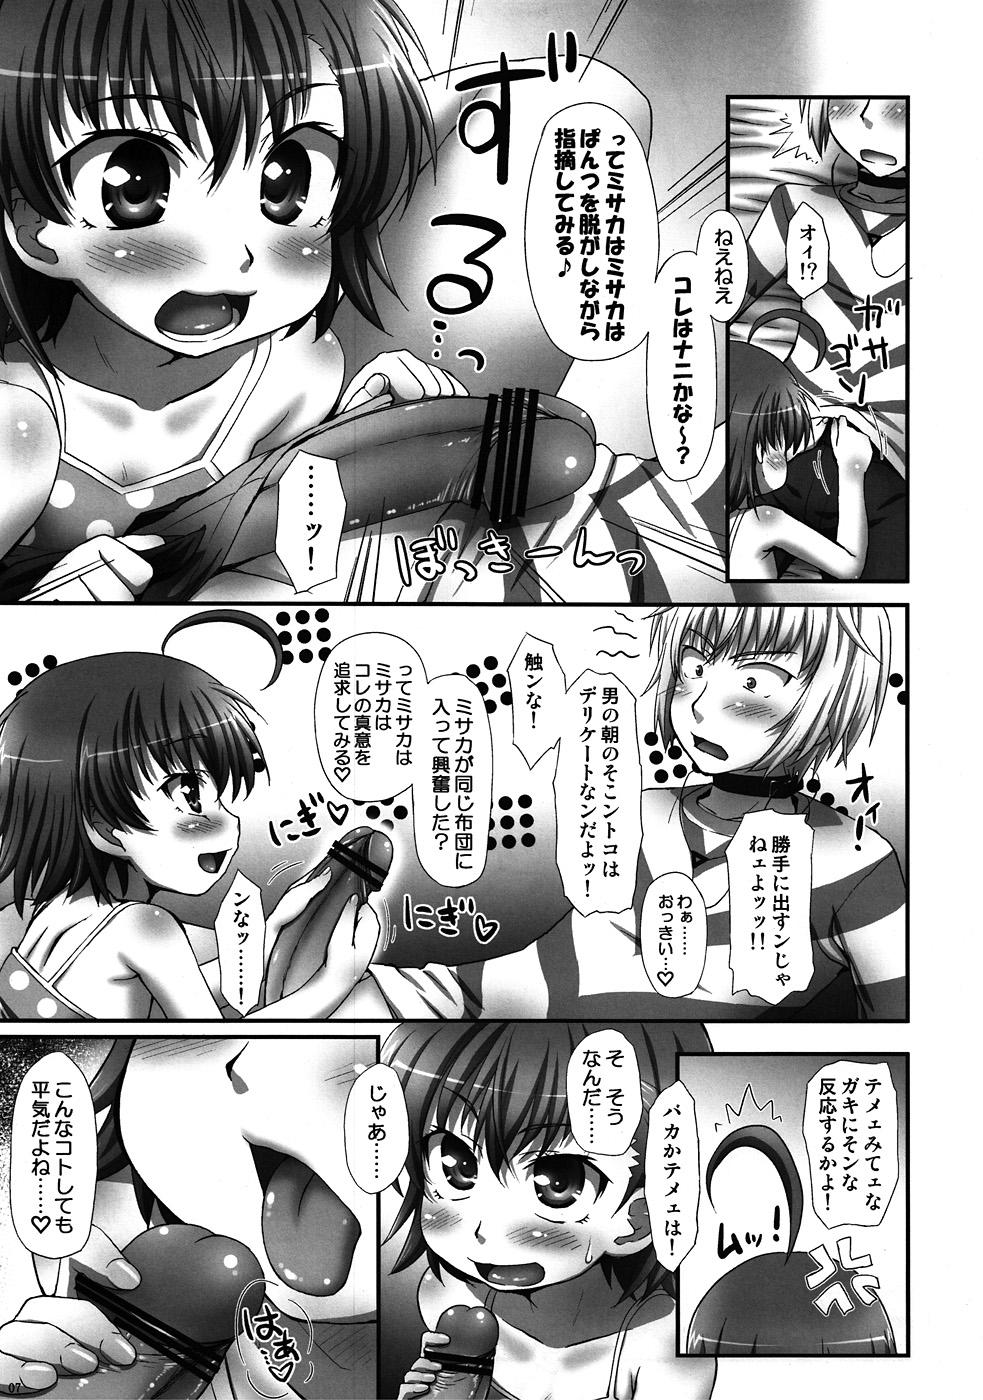 Ballbusting Misaka wa Misaka wa Misaka Hon. - Toaru majutsu no index Toilet - Page 6